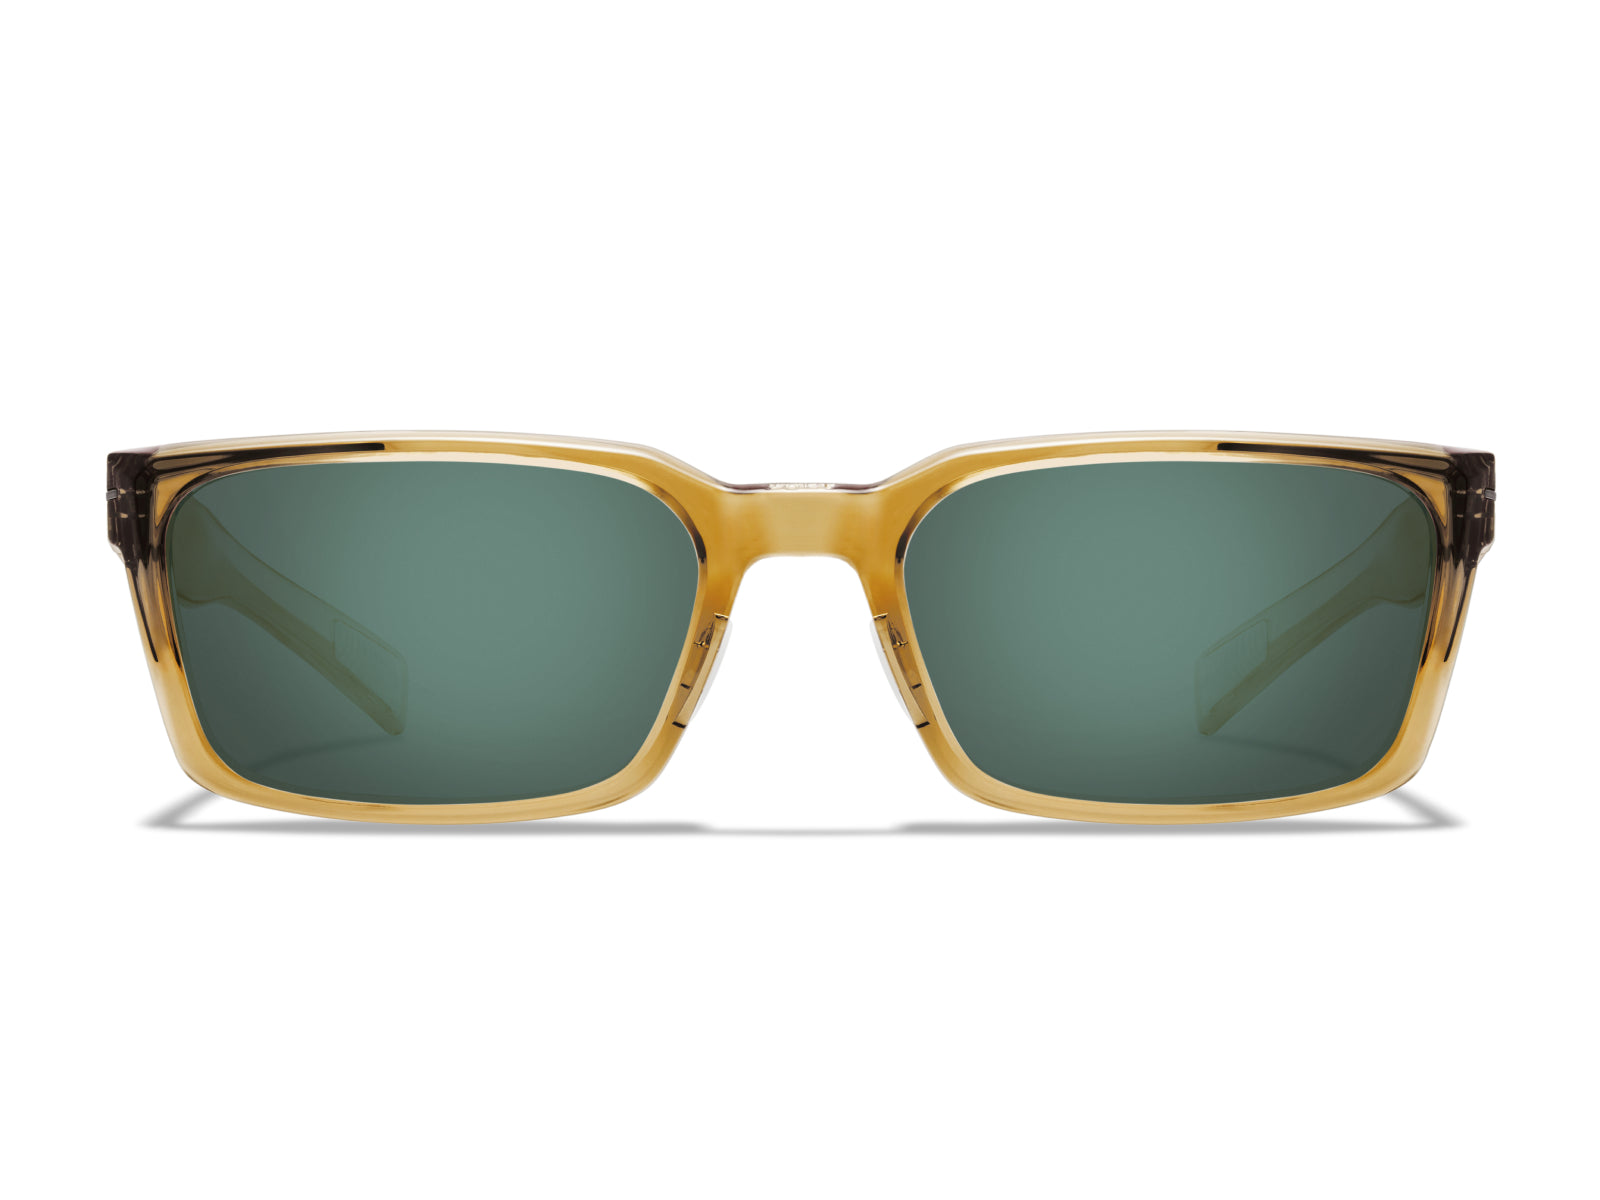 ROKA: Performance Sunglasses, Eyewear & Apparel